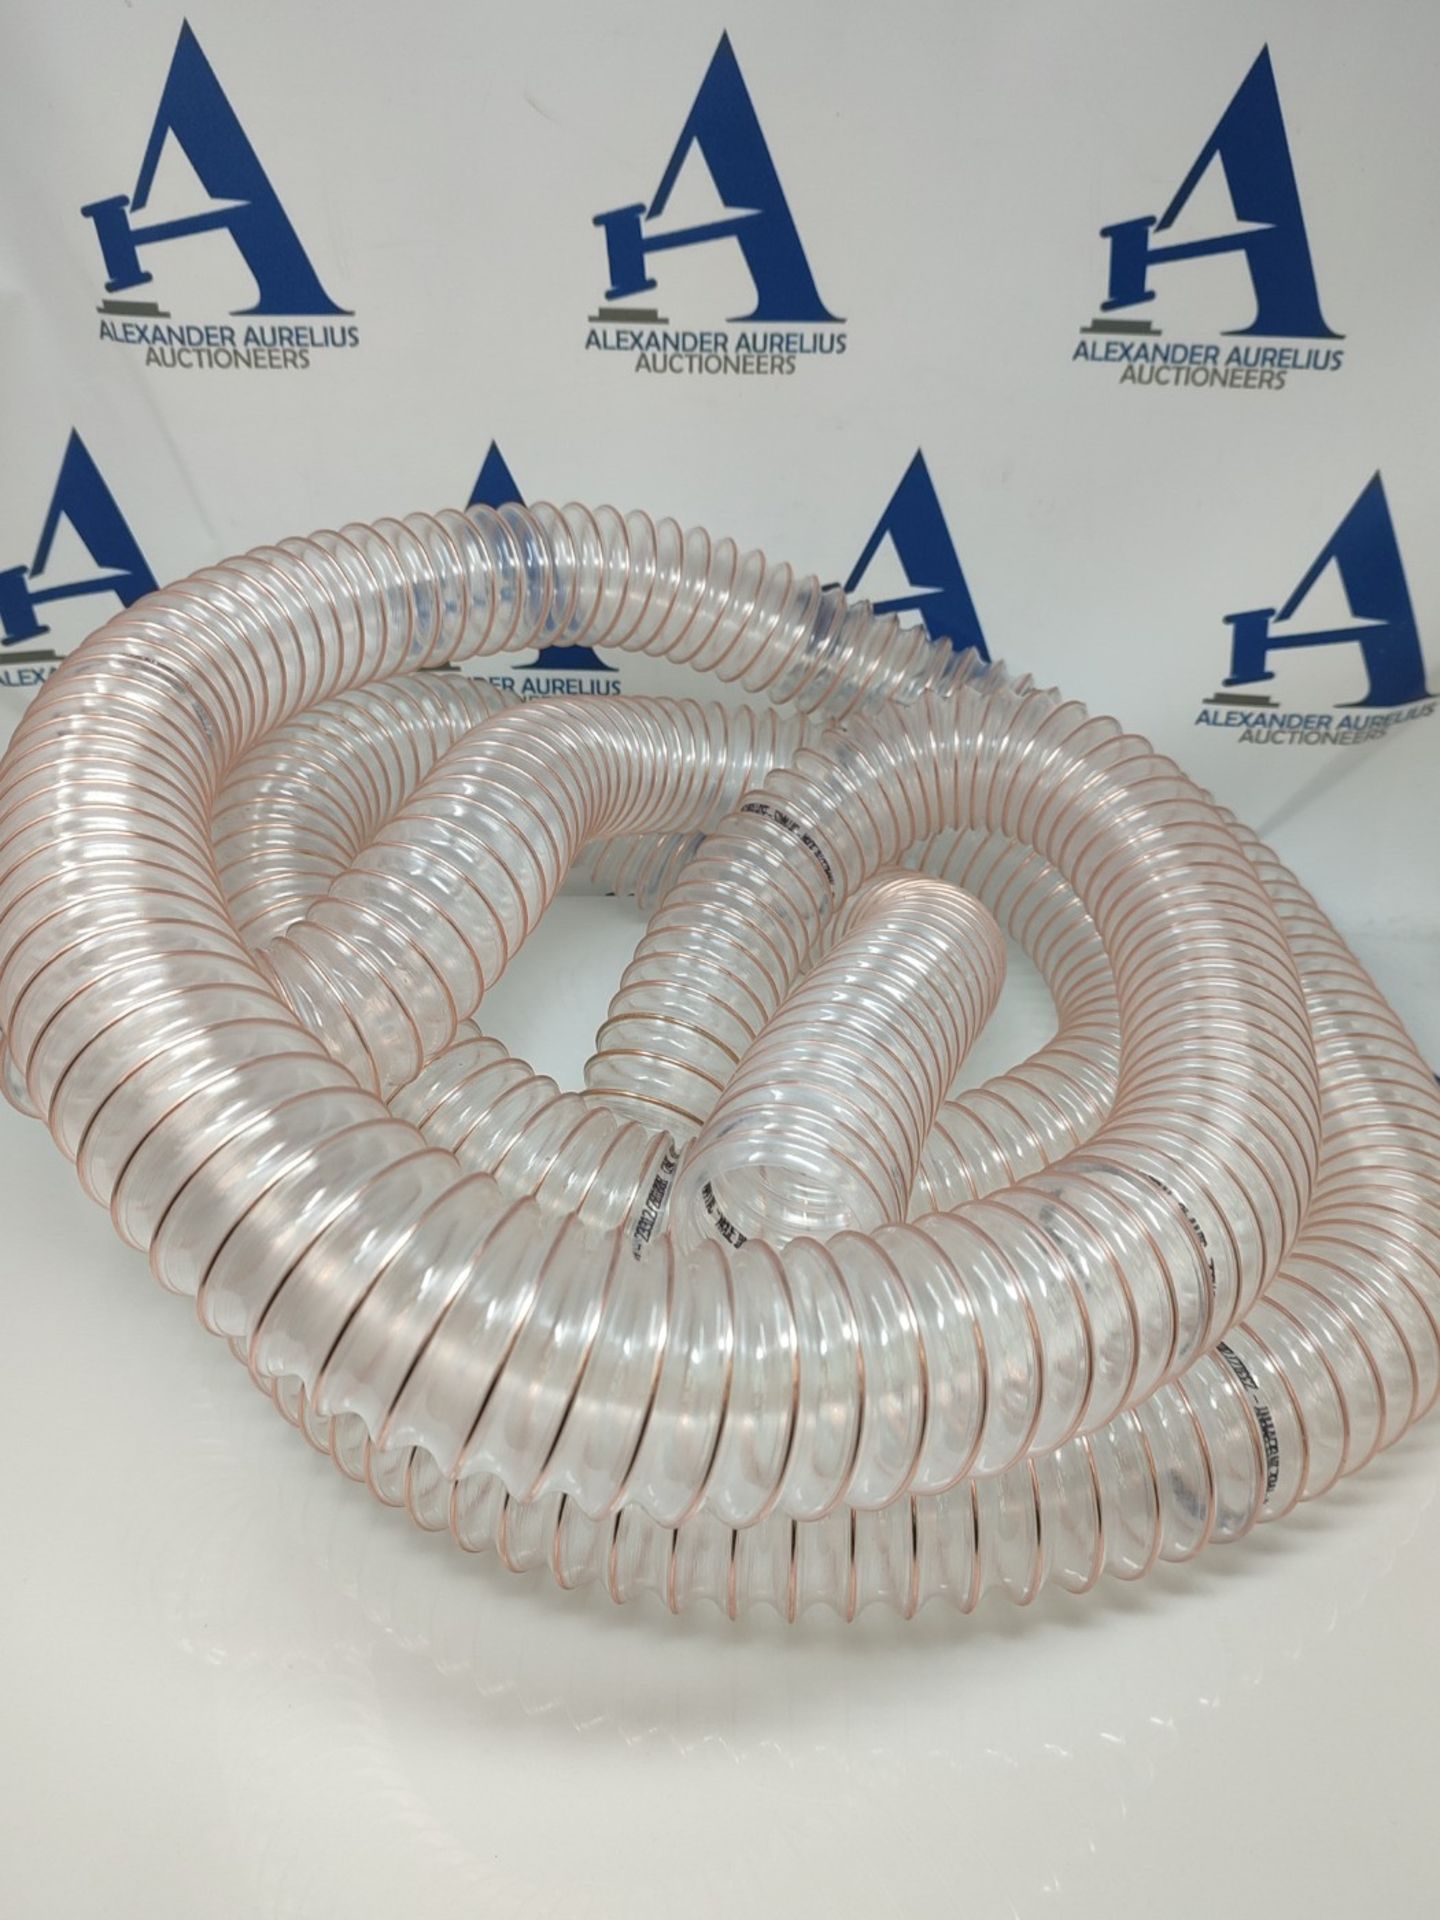 VACUFLEX Polyurethane (PU), PU 400 C ECO - Polyurethane suction hose with wall thickne - Image 2 of 2